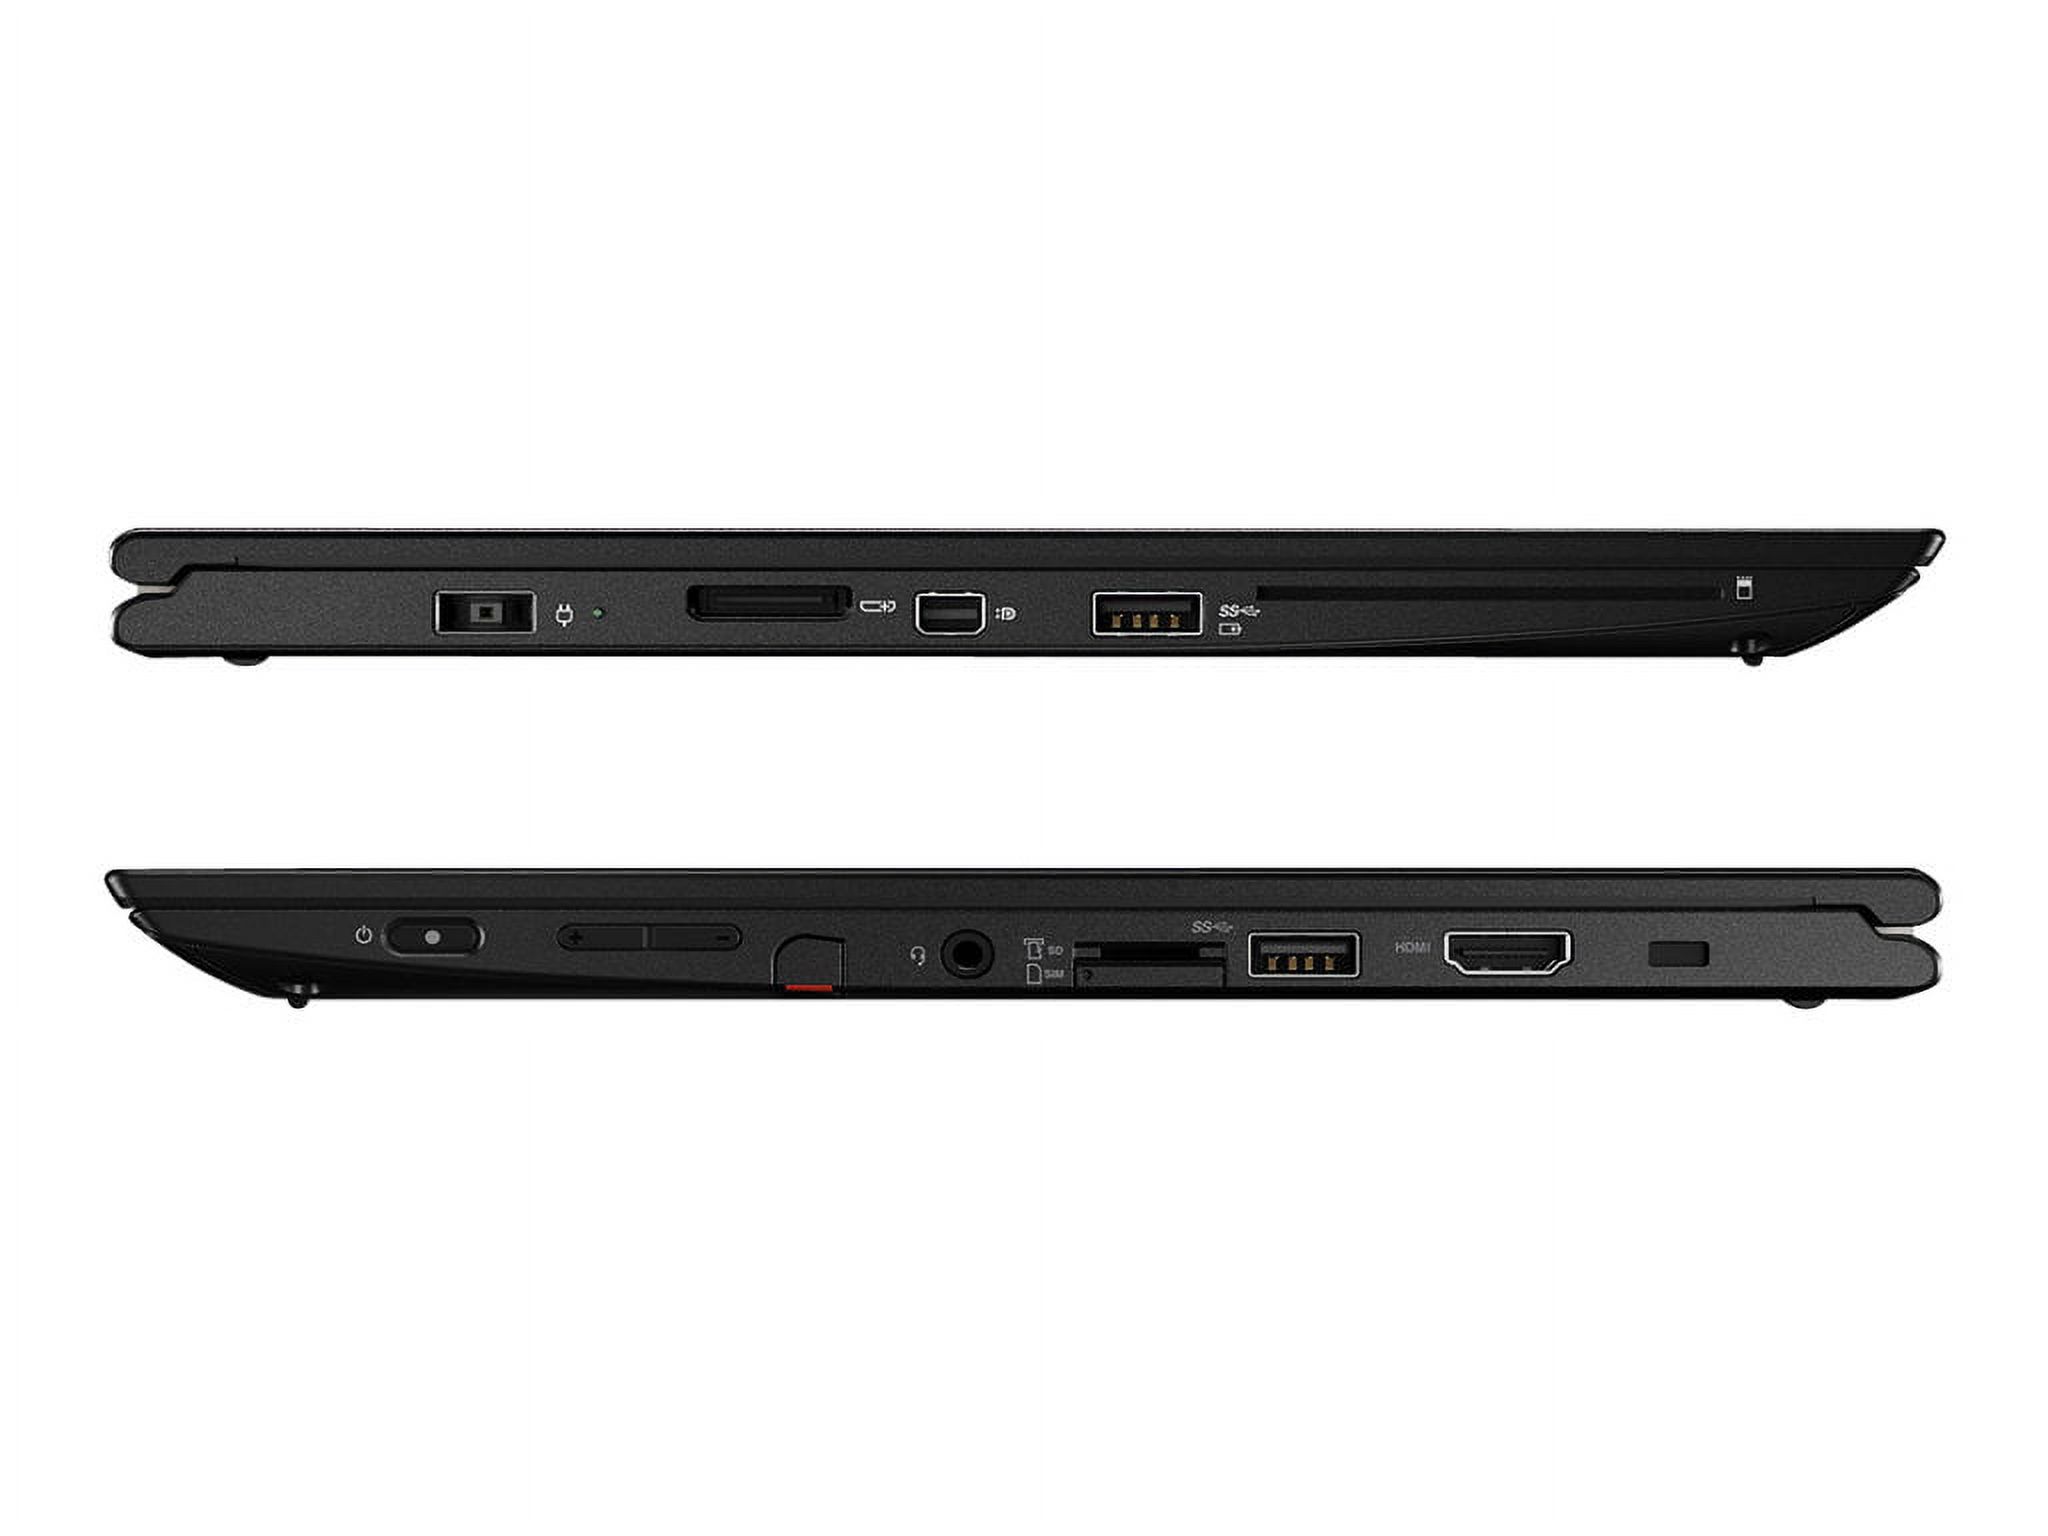 Lenovo ThinkPad Yoga 260 20FD - Ultrabook - Intel Core i5 - 6200U / up to 2.8 GHz - Win 10 Pro 64-bit - HD Graphics 520 - 8 GB RAM - 256 GB SSD TCG Opal Encryption 2 - 12.5" IPS touchscreen 1920 x 1080 (Full HD) - Wi-Fi 5 - midnight black - kbd: US - image 3 of 9